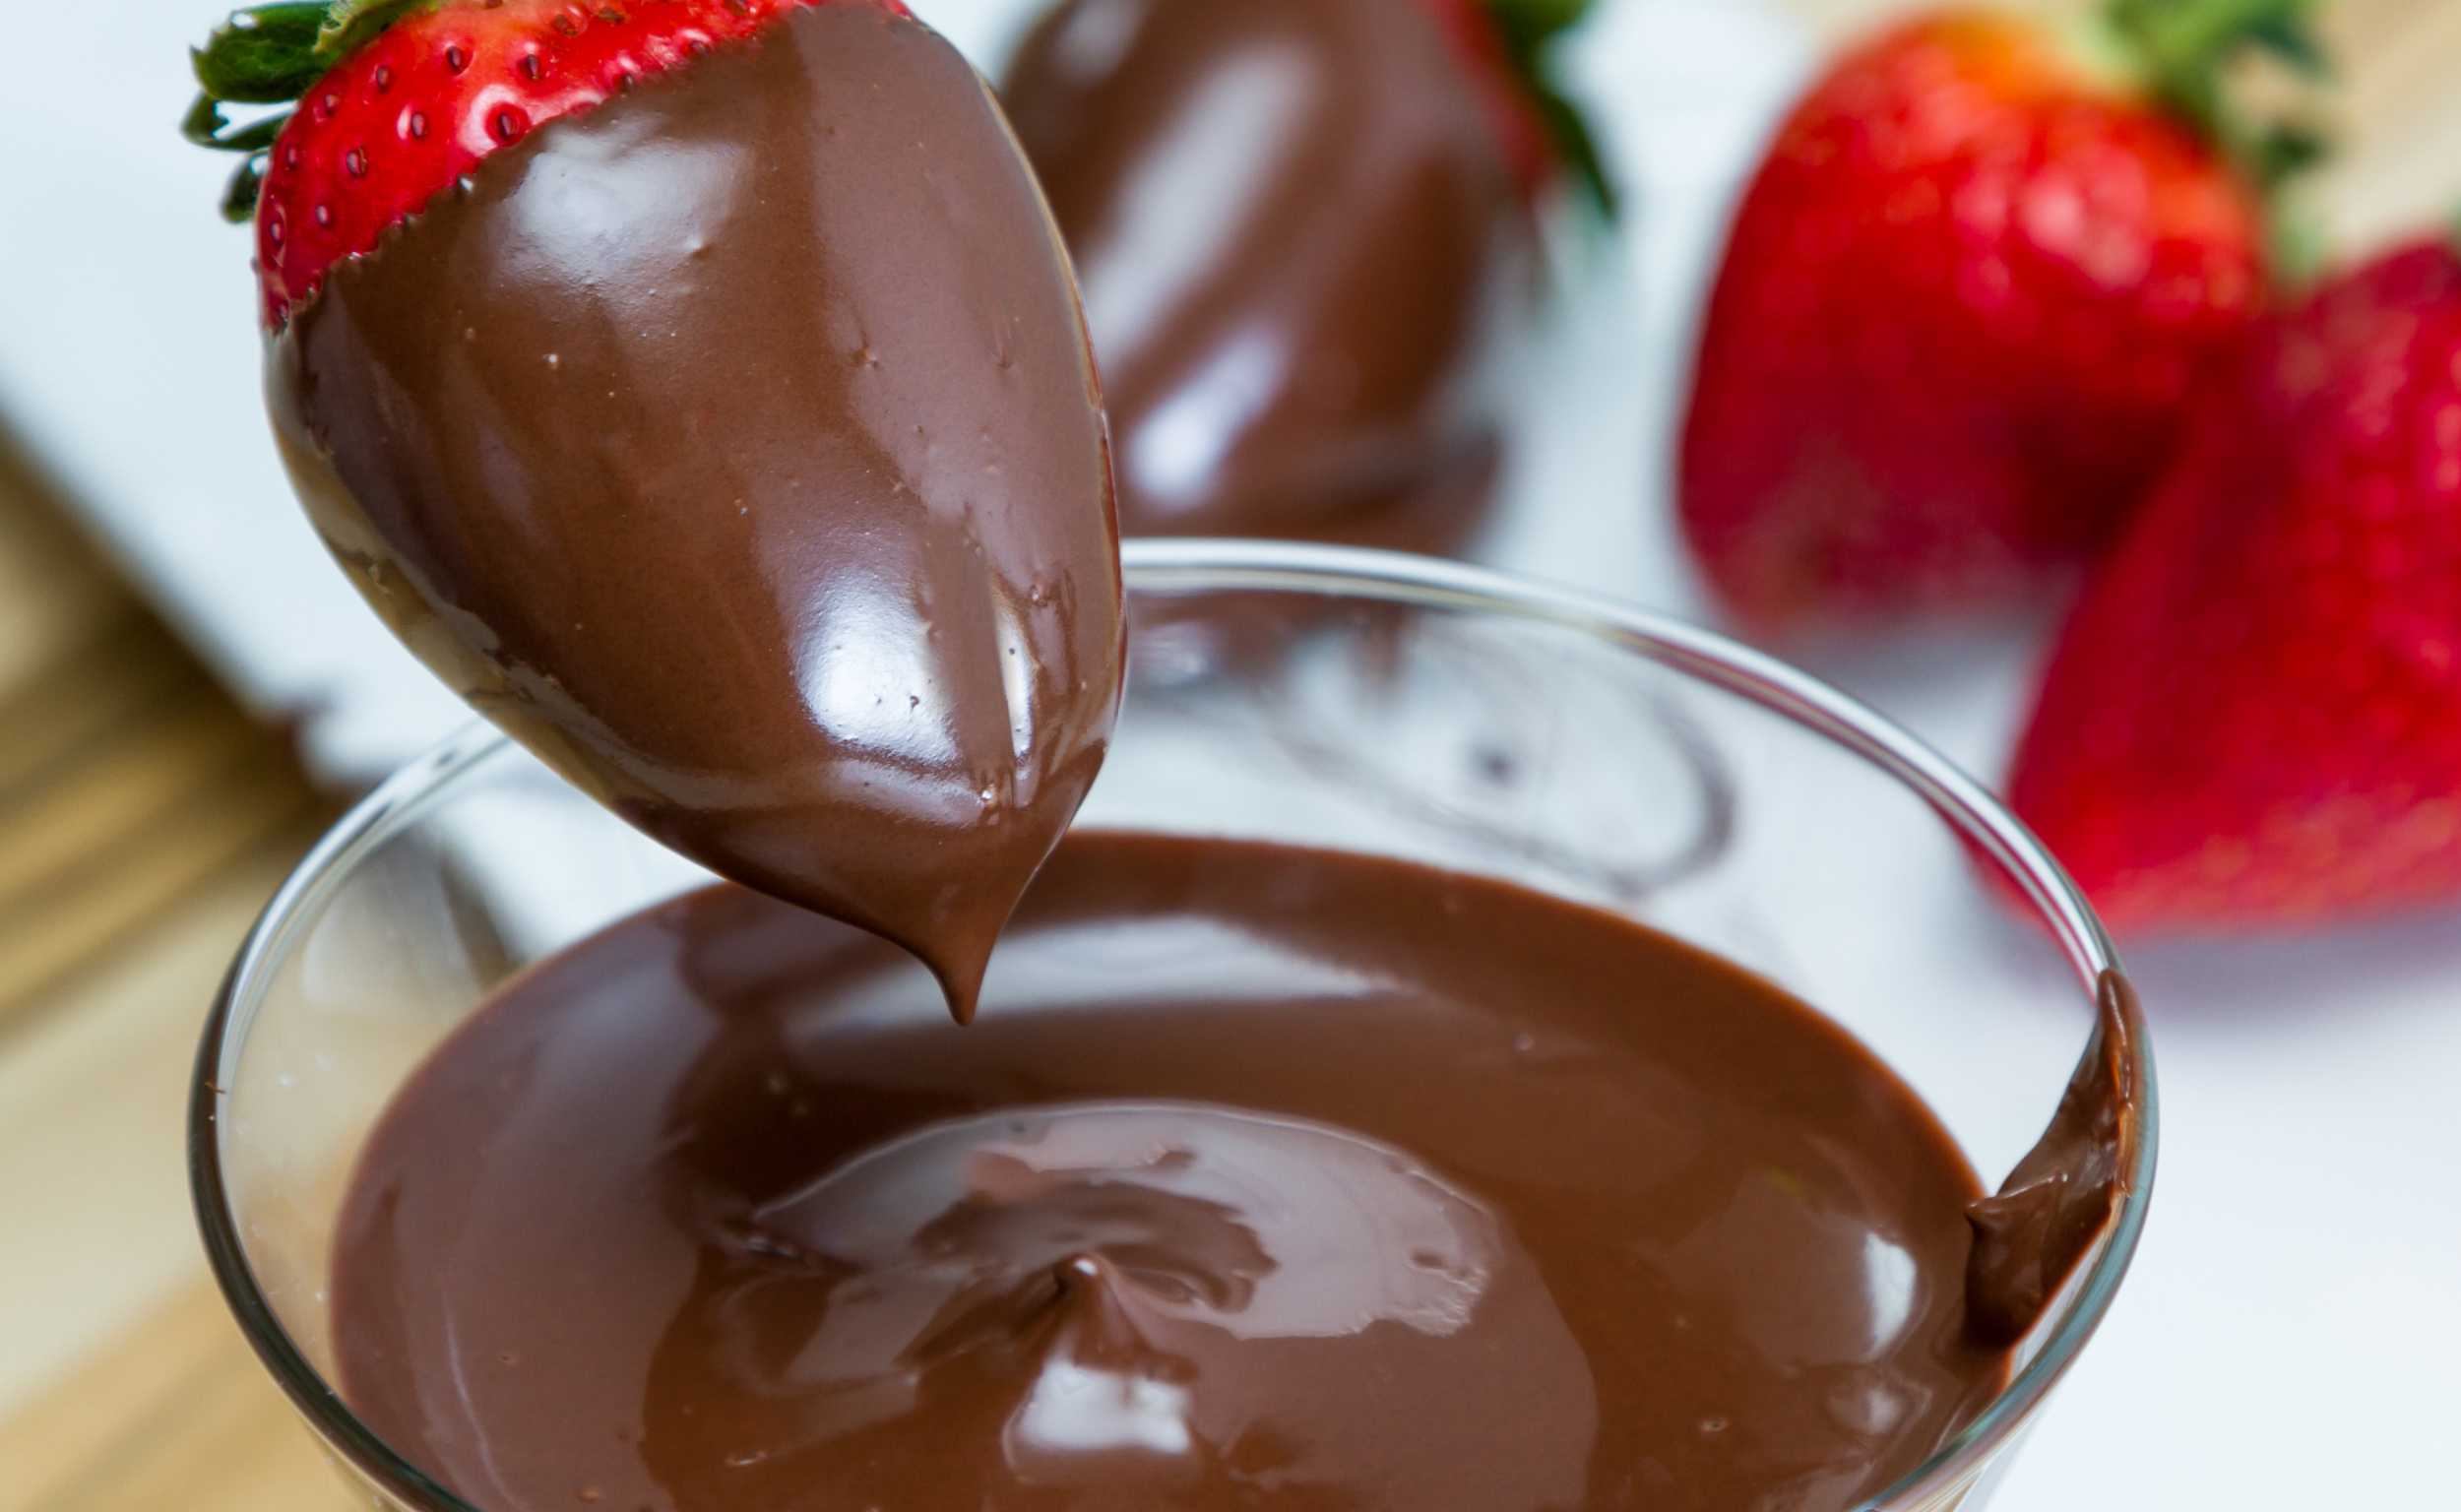 dipping fresh strawberries in dark keto-friendly chocolate